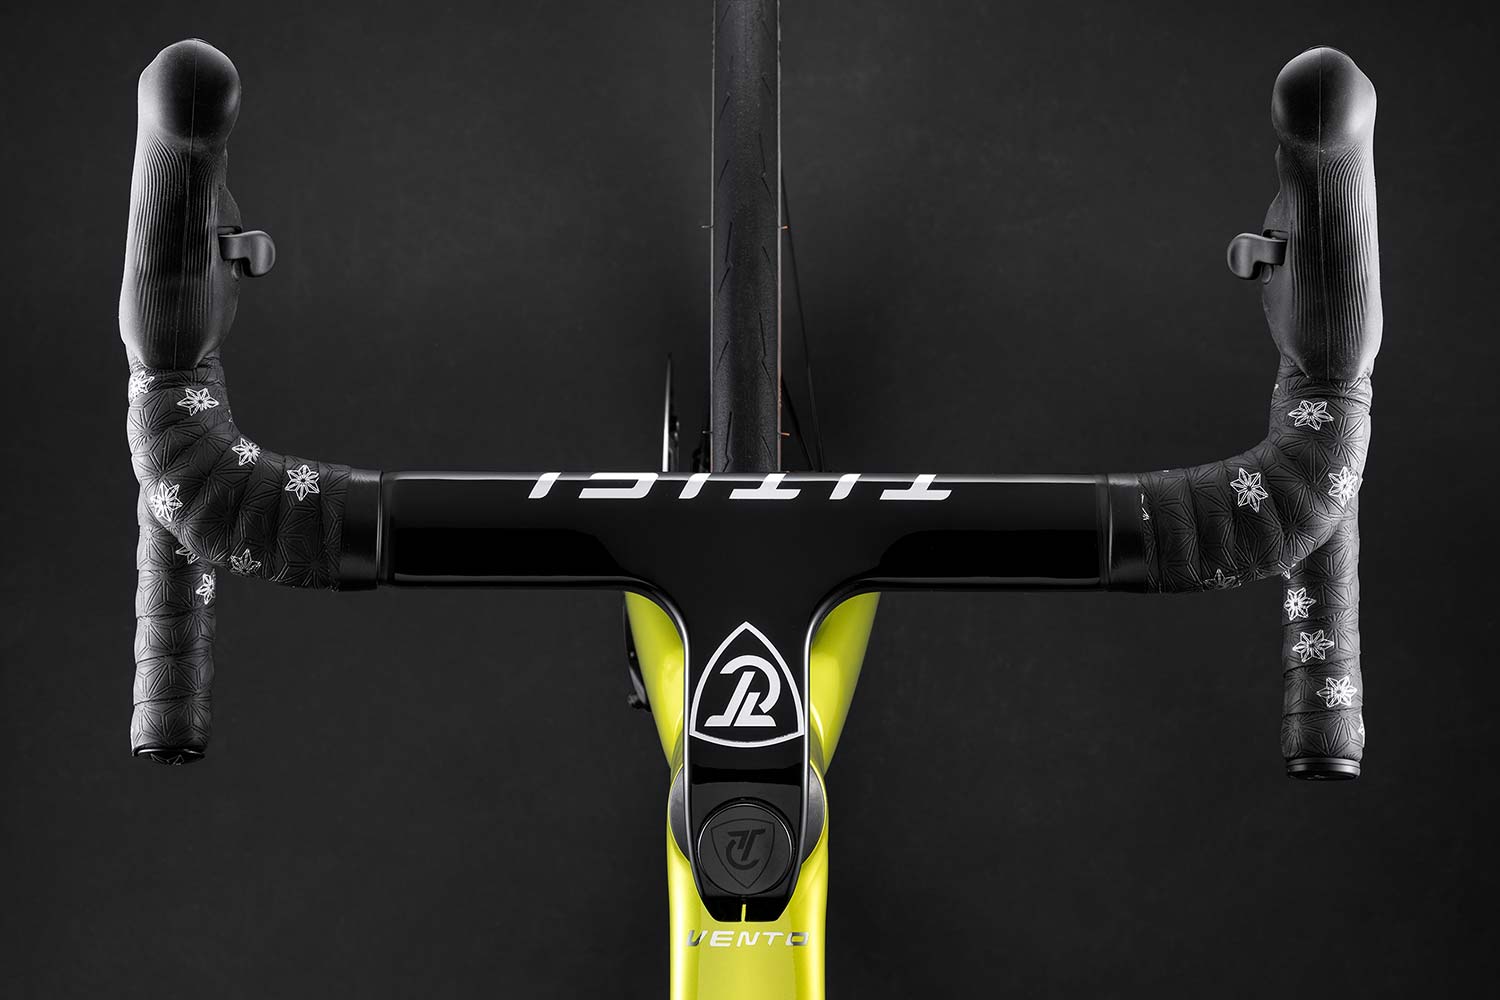 2021 Titici Vento light aero road bike, full-custom fully-integrated lightweight carbon aerodynamic PAT Flexy climbers road bike, studio photo by Pietro Bianchi, details